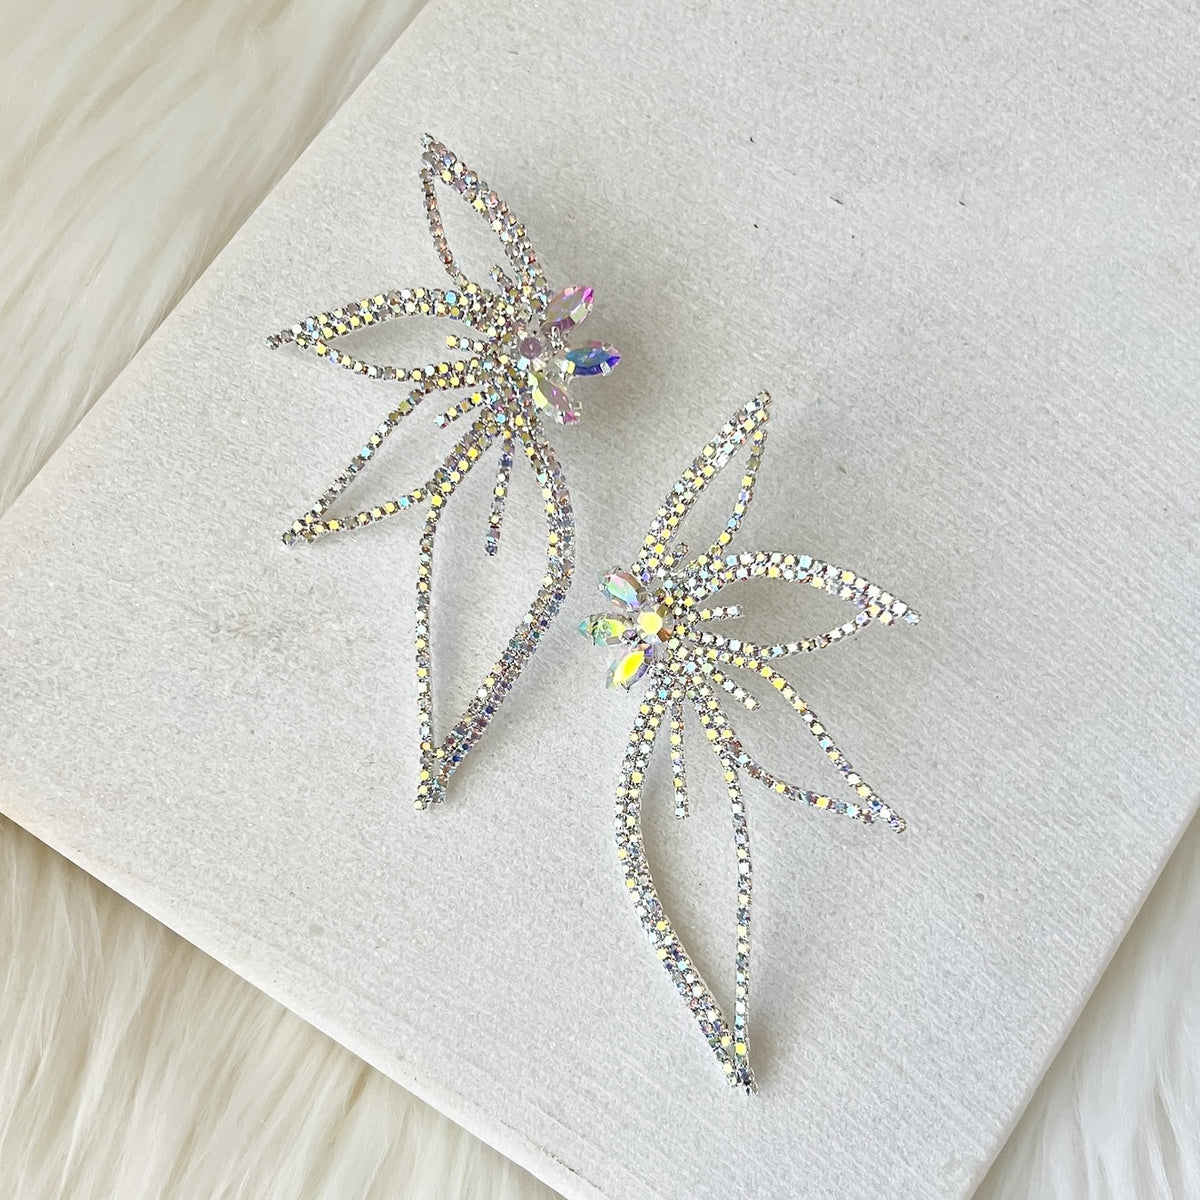 Lorelei Floral Statement Earrings - NOW IN 5 COLORS!